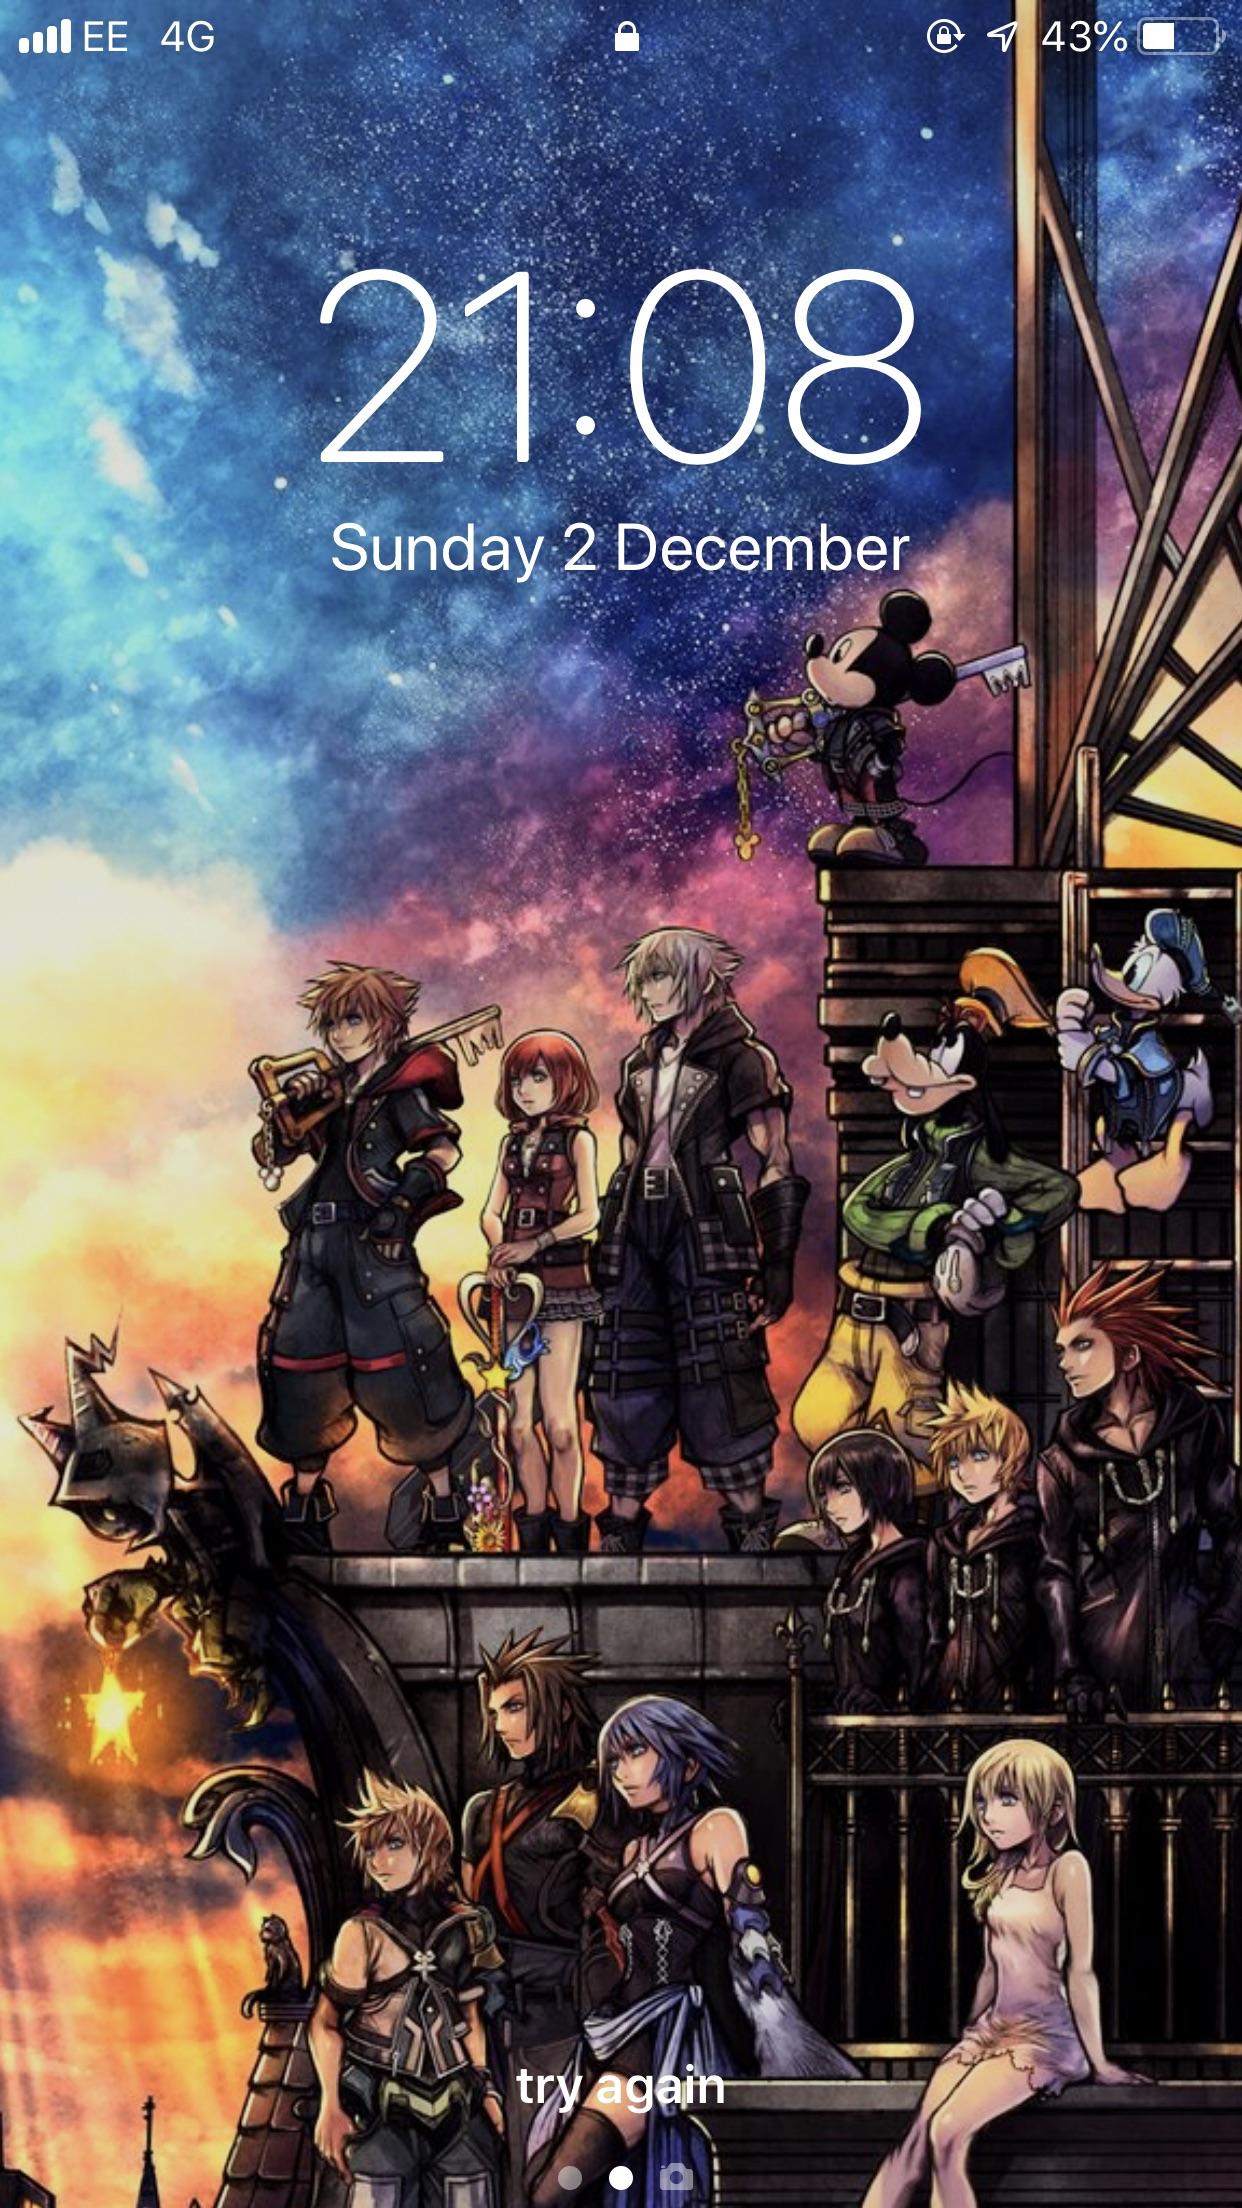 Hd Kingdom Hearts Wallpaper Phone - HD Wallpaper 